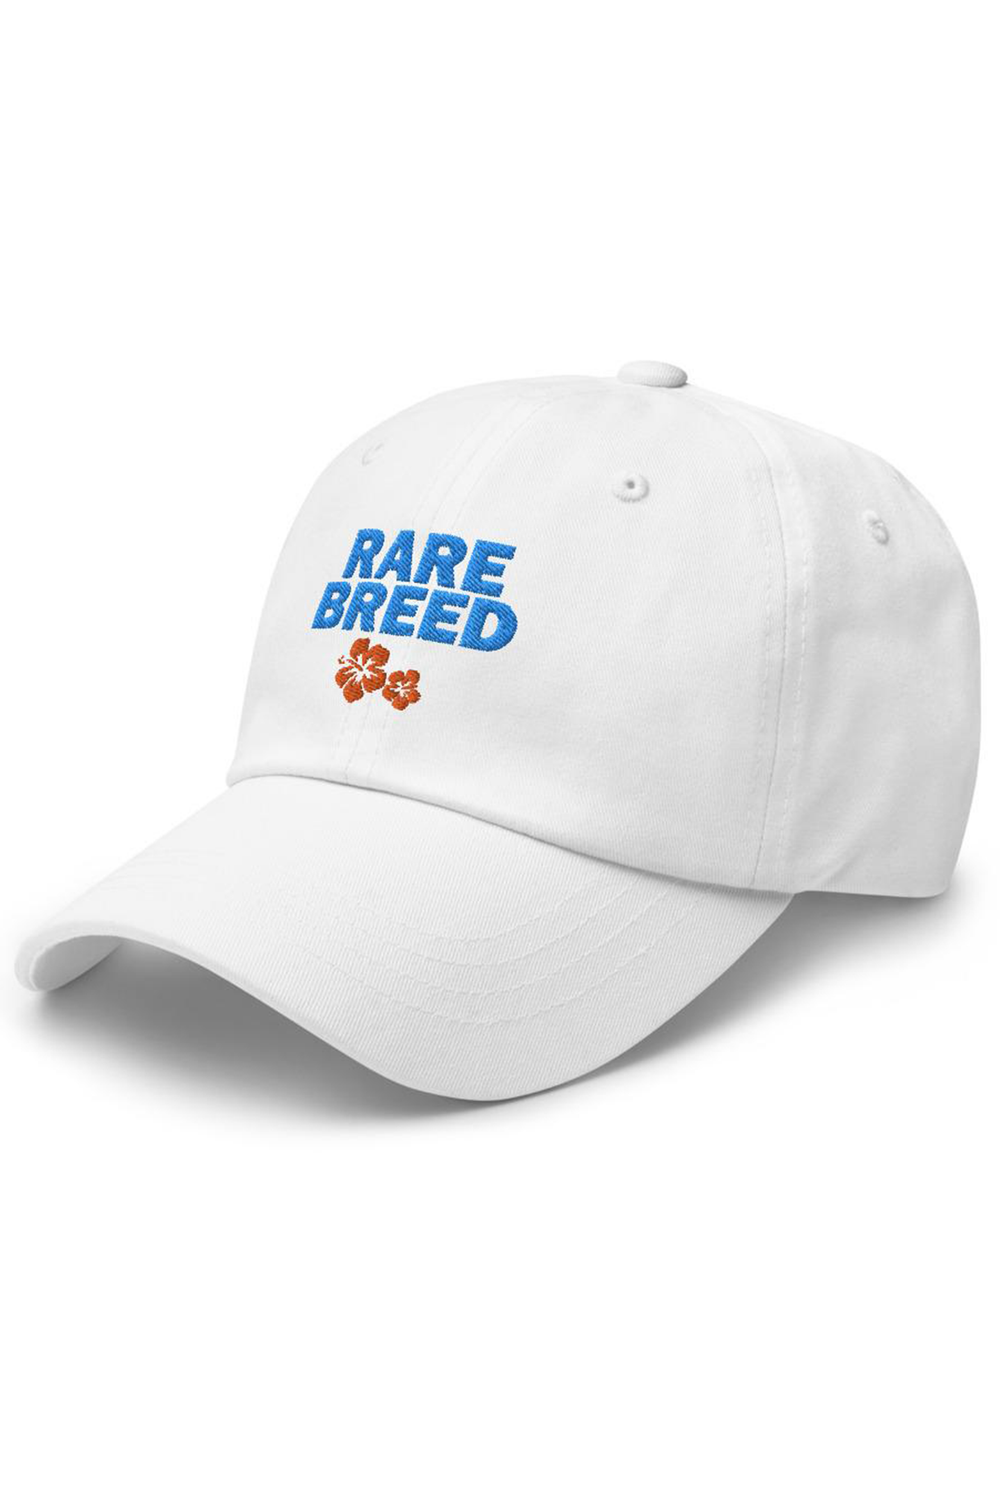 Nike SB Dunk High Hawaii "Rare Breed" Dad Hat - Zamage